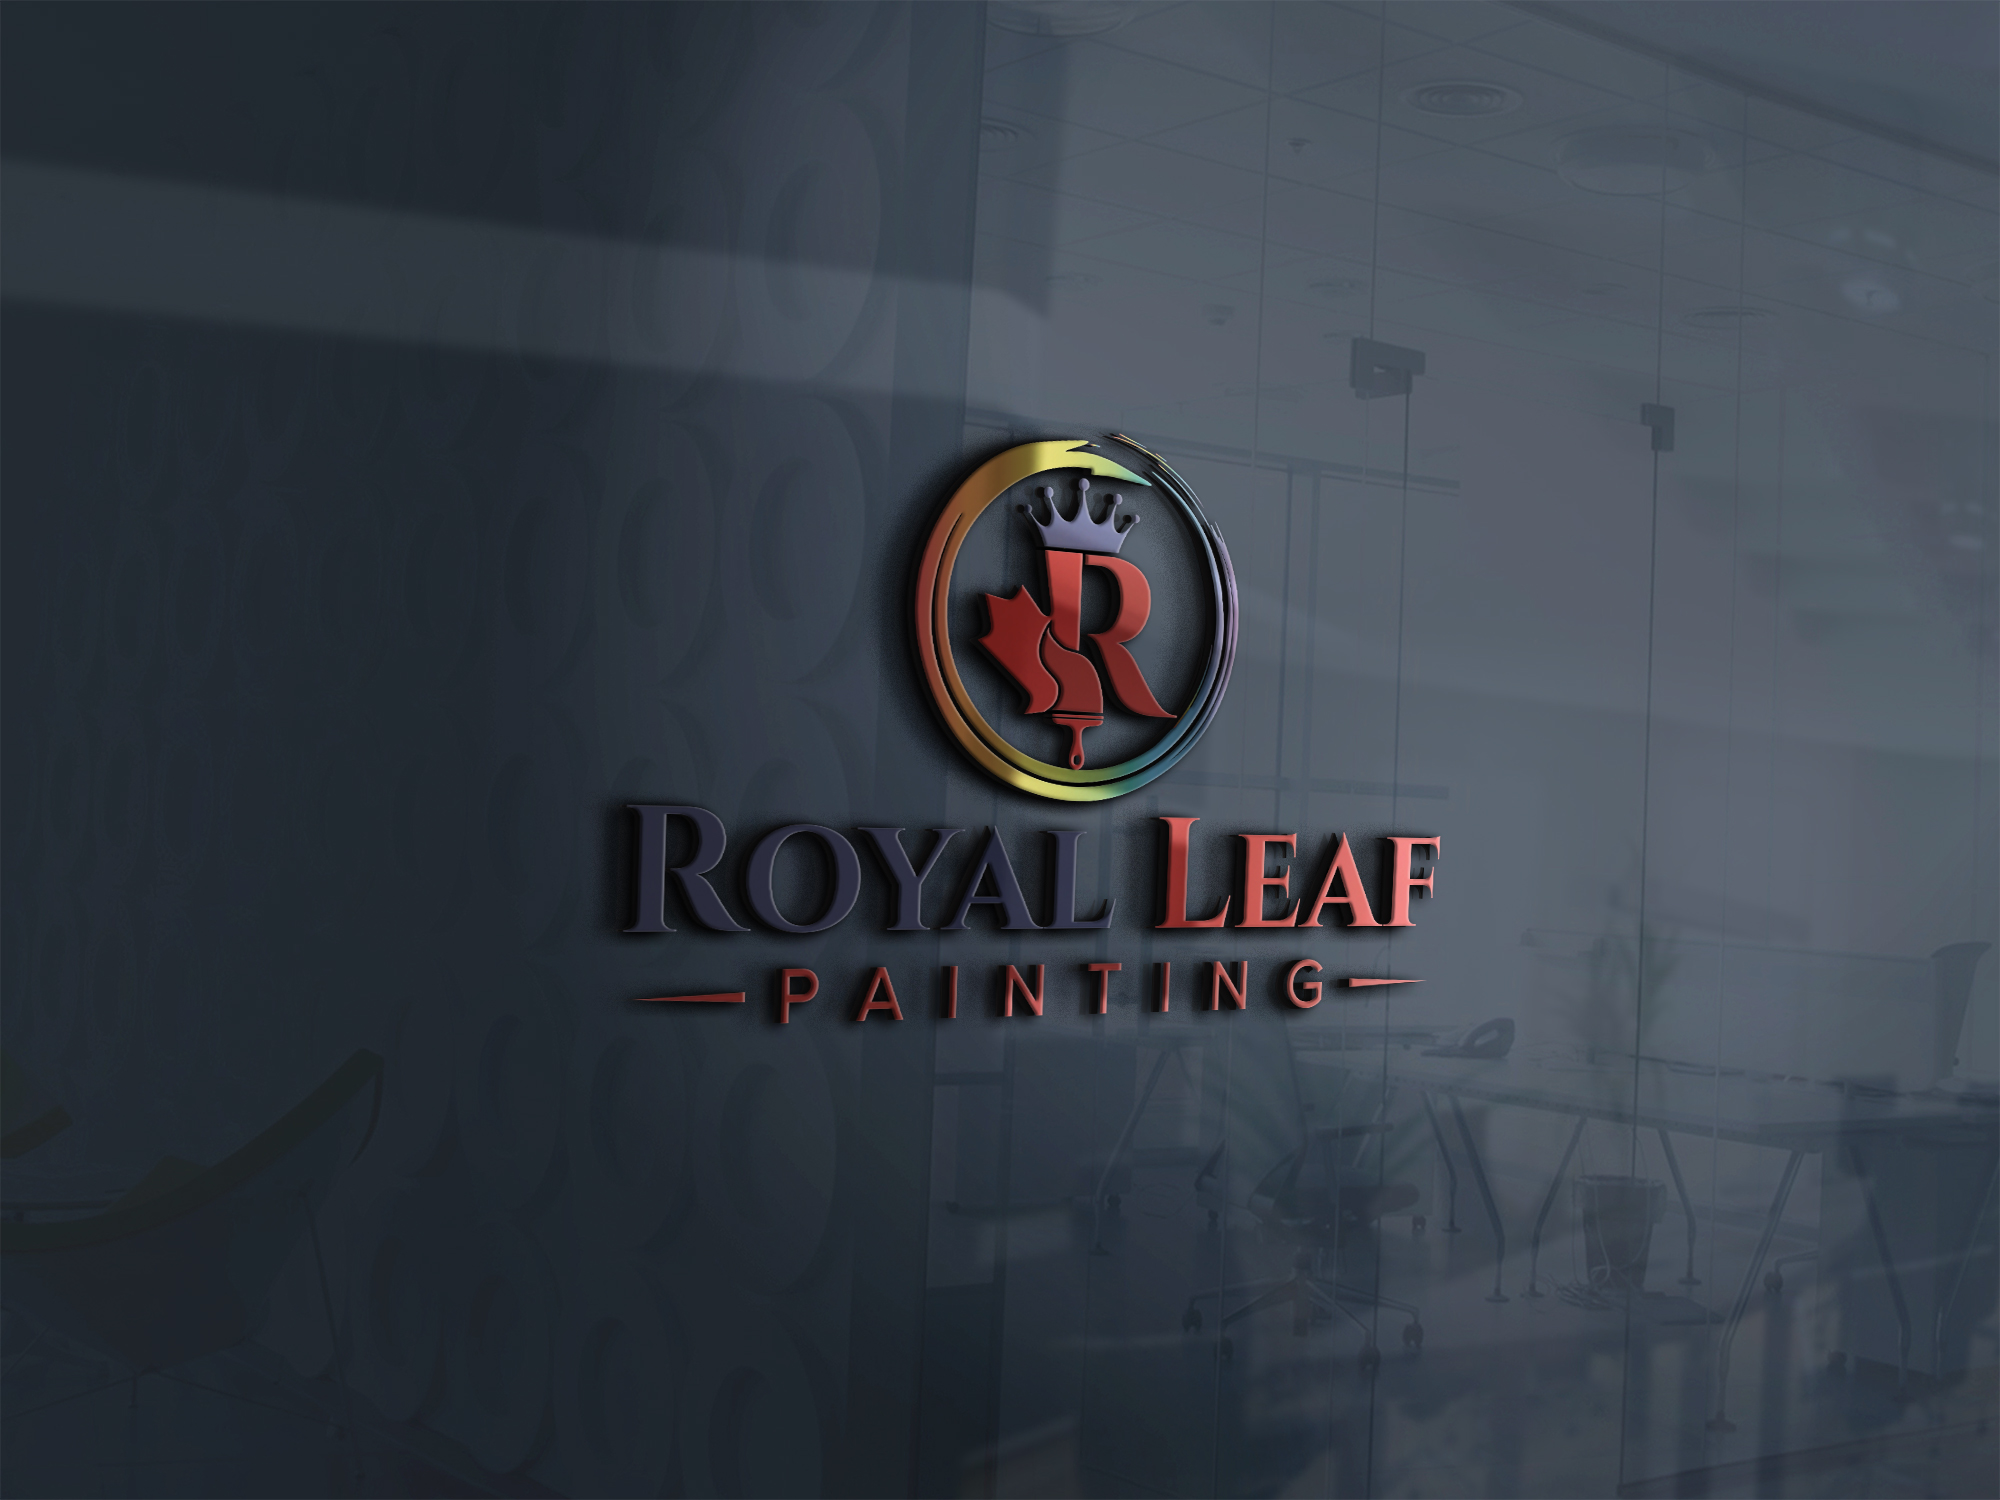 Royal Leaf Painting wall logo